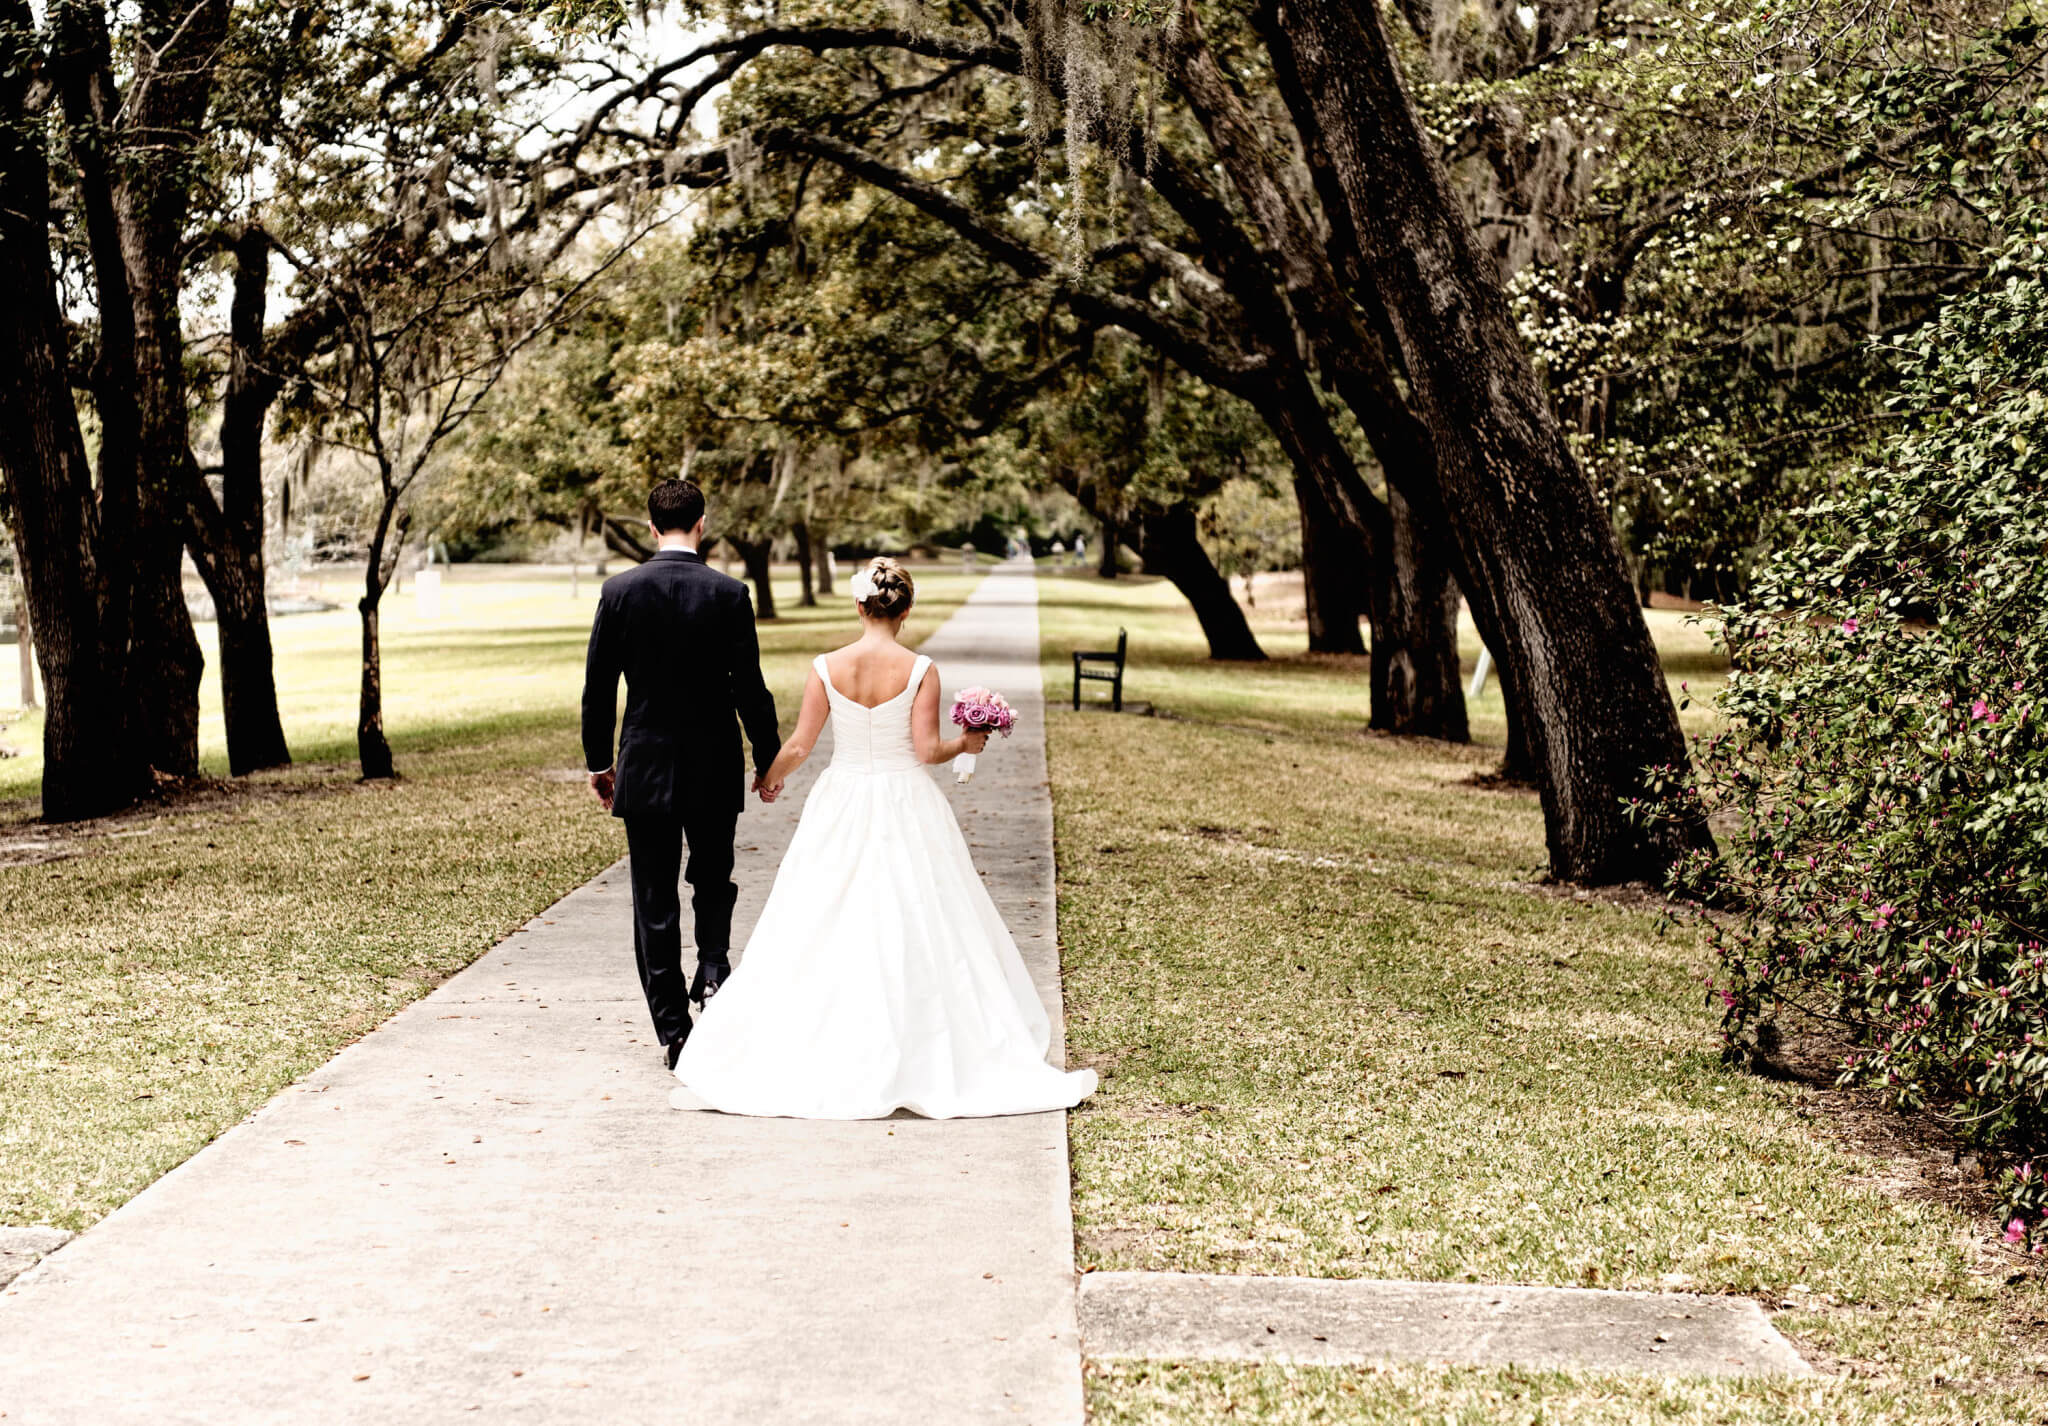 Bride and groom walking down sidewalk through the trees - modern